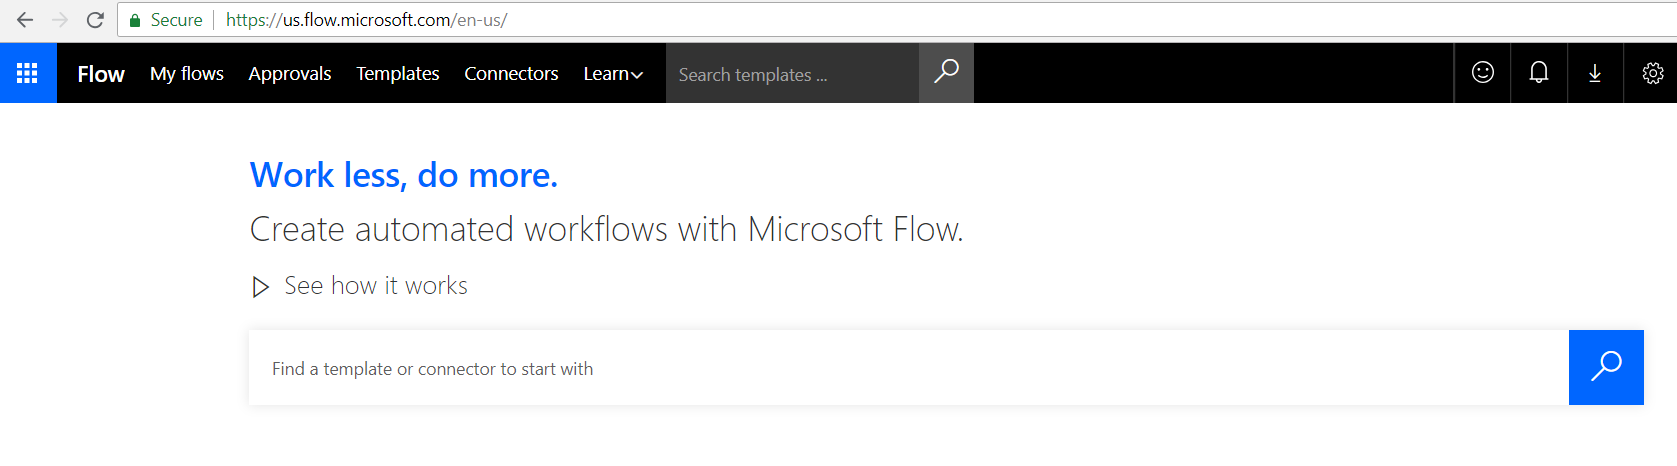 Microsoft flow screen